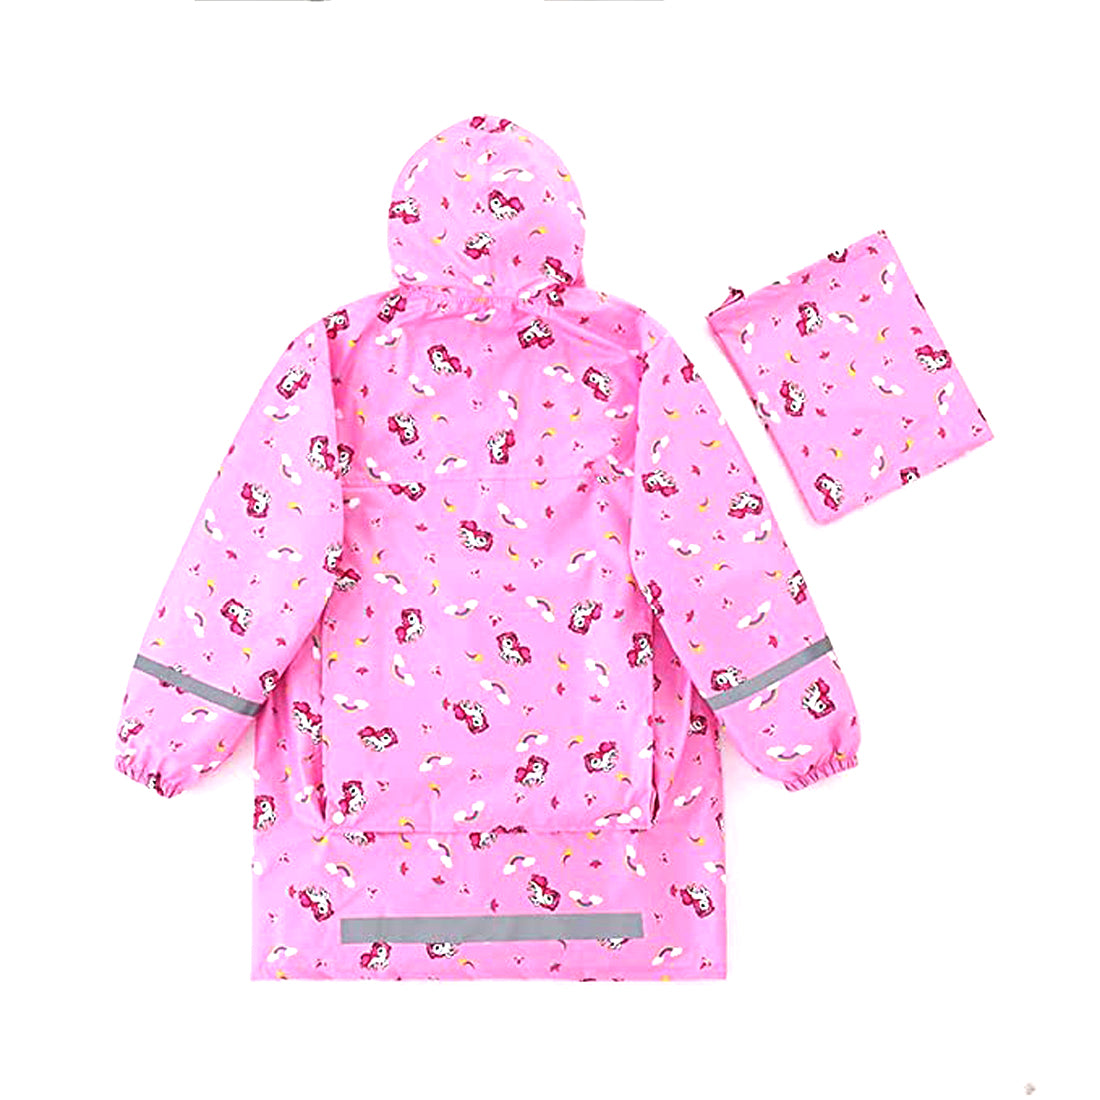 Little Surprise Box All Over Jumpsuit / Playsuit Raincoat for Kids - Pink Unicorn Theme